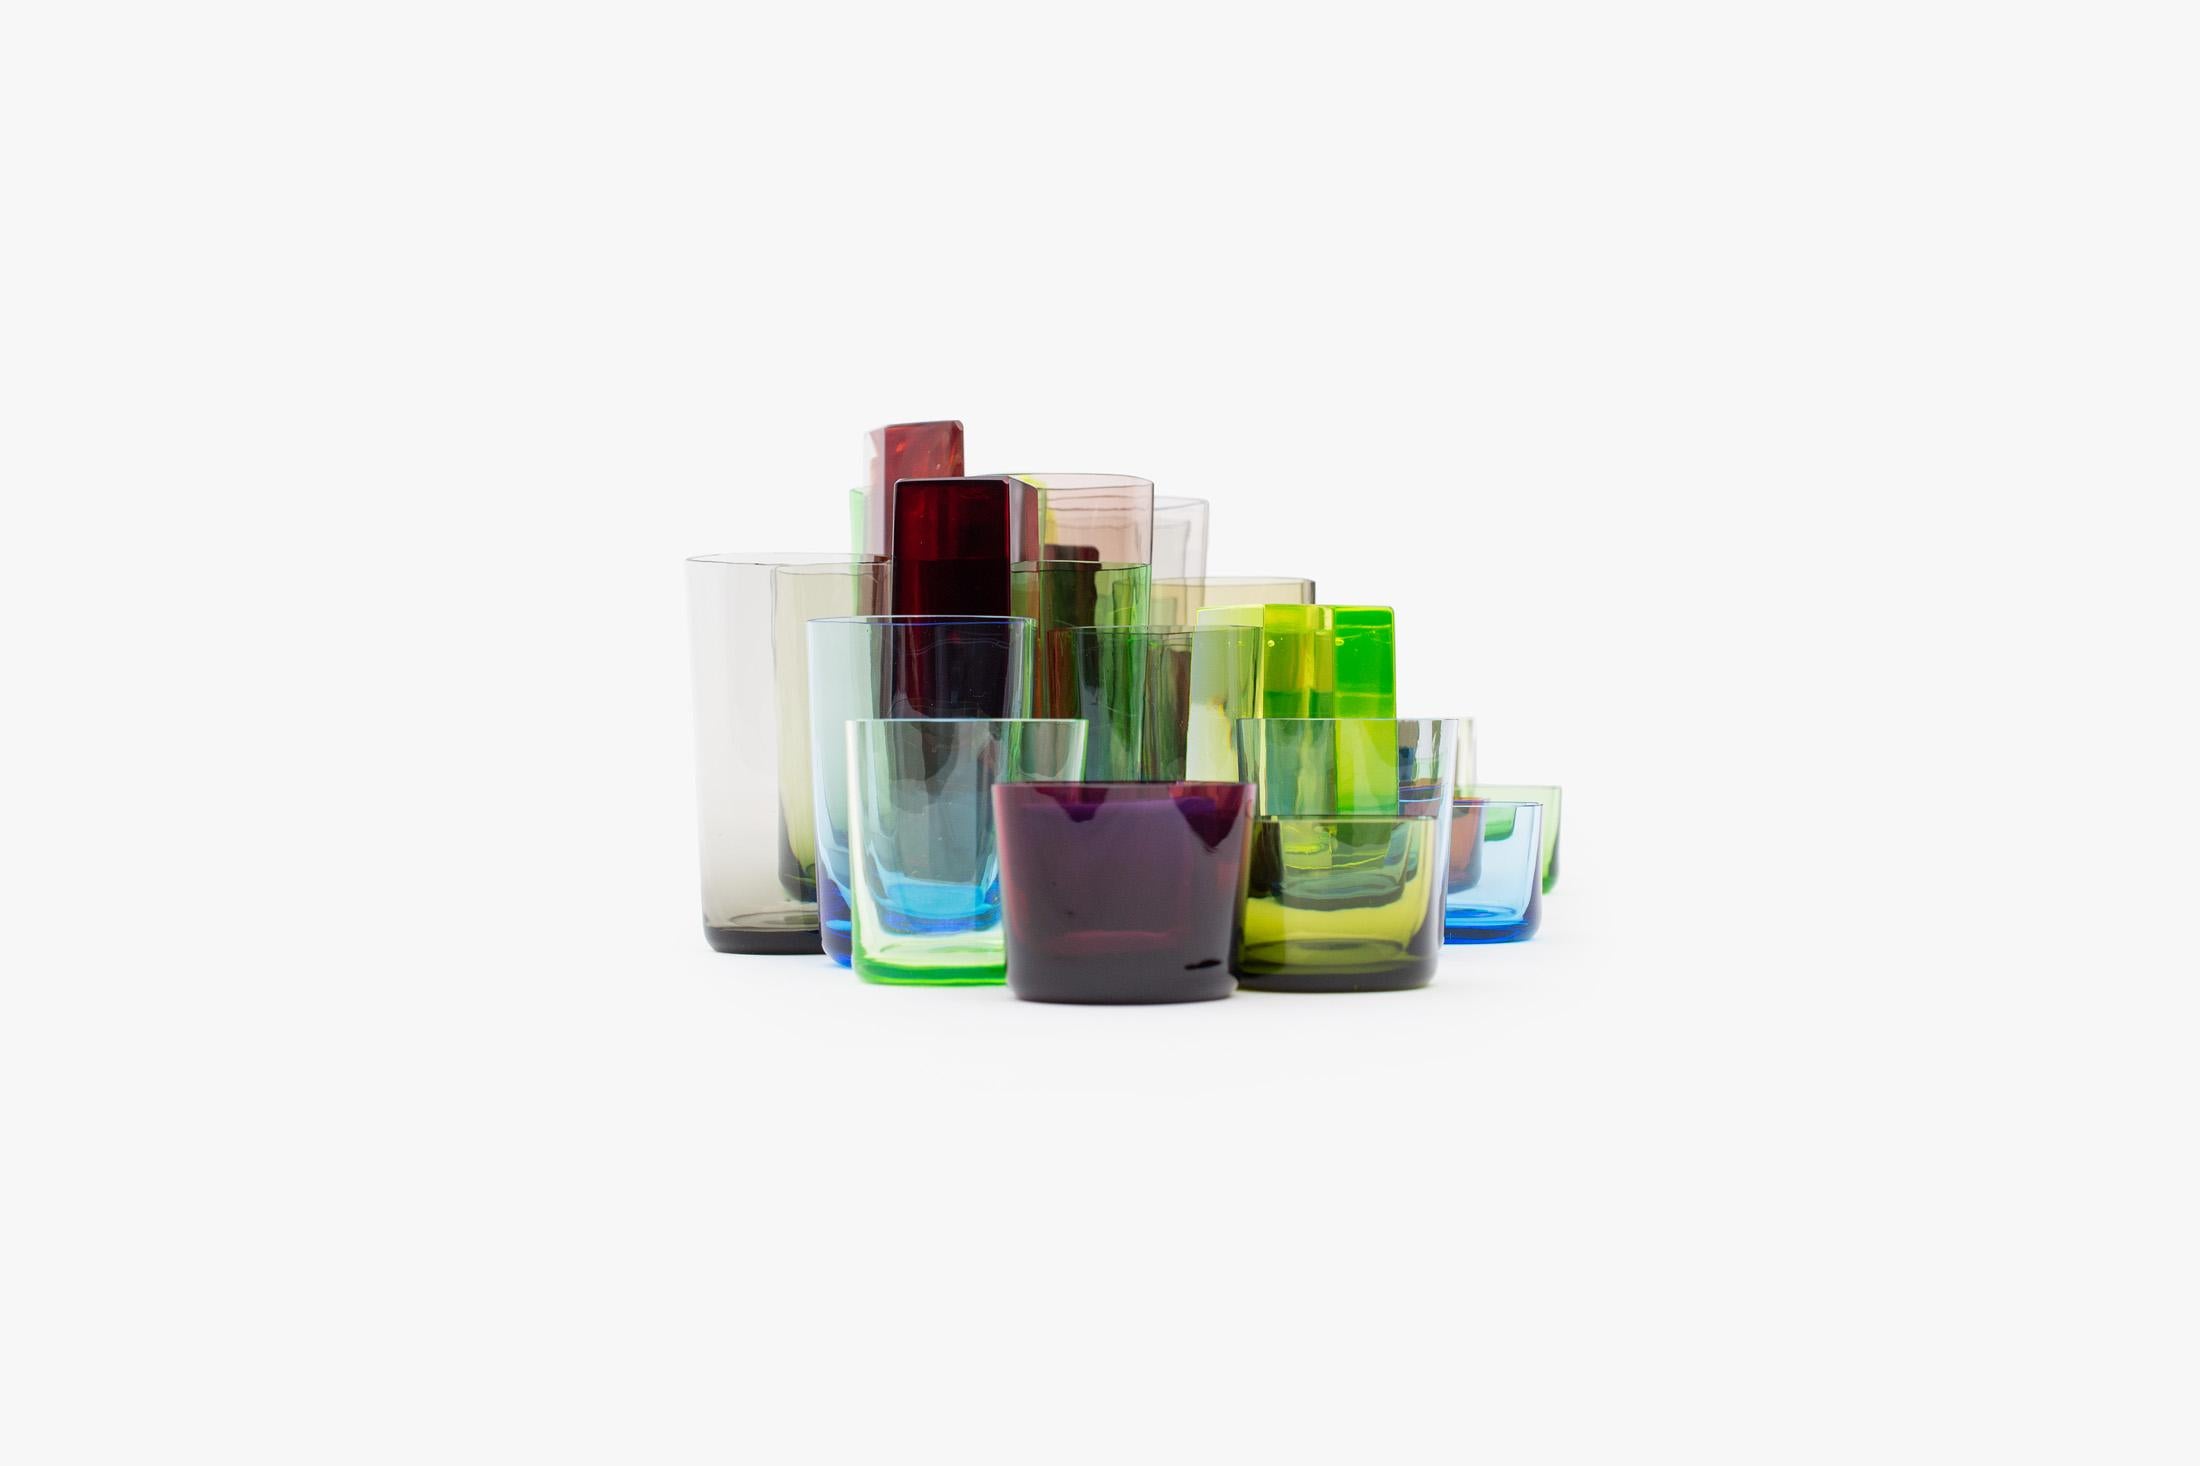 Czech Polygon Glassware by Omer Arbel for OAO Works, Geometric Blown Glass Sculpture  For Sale